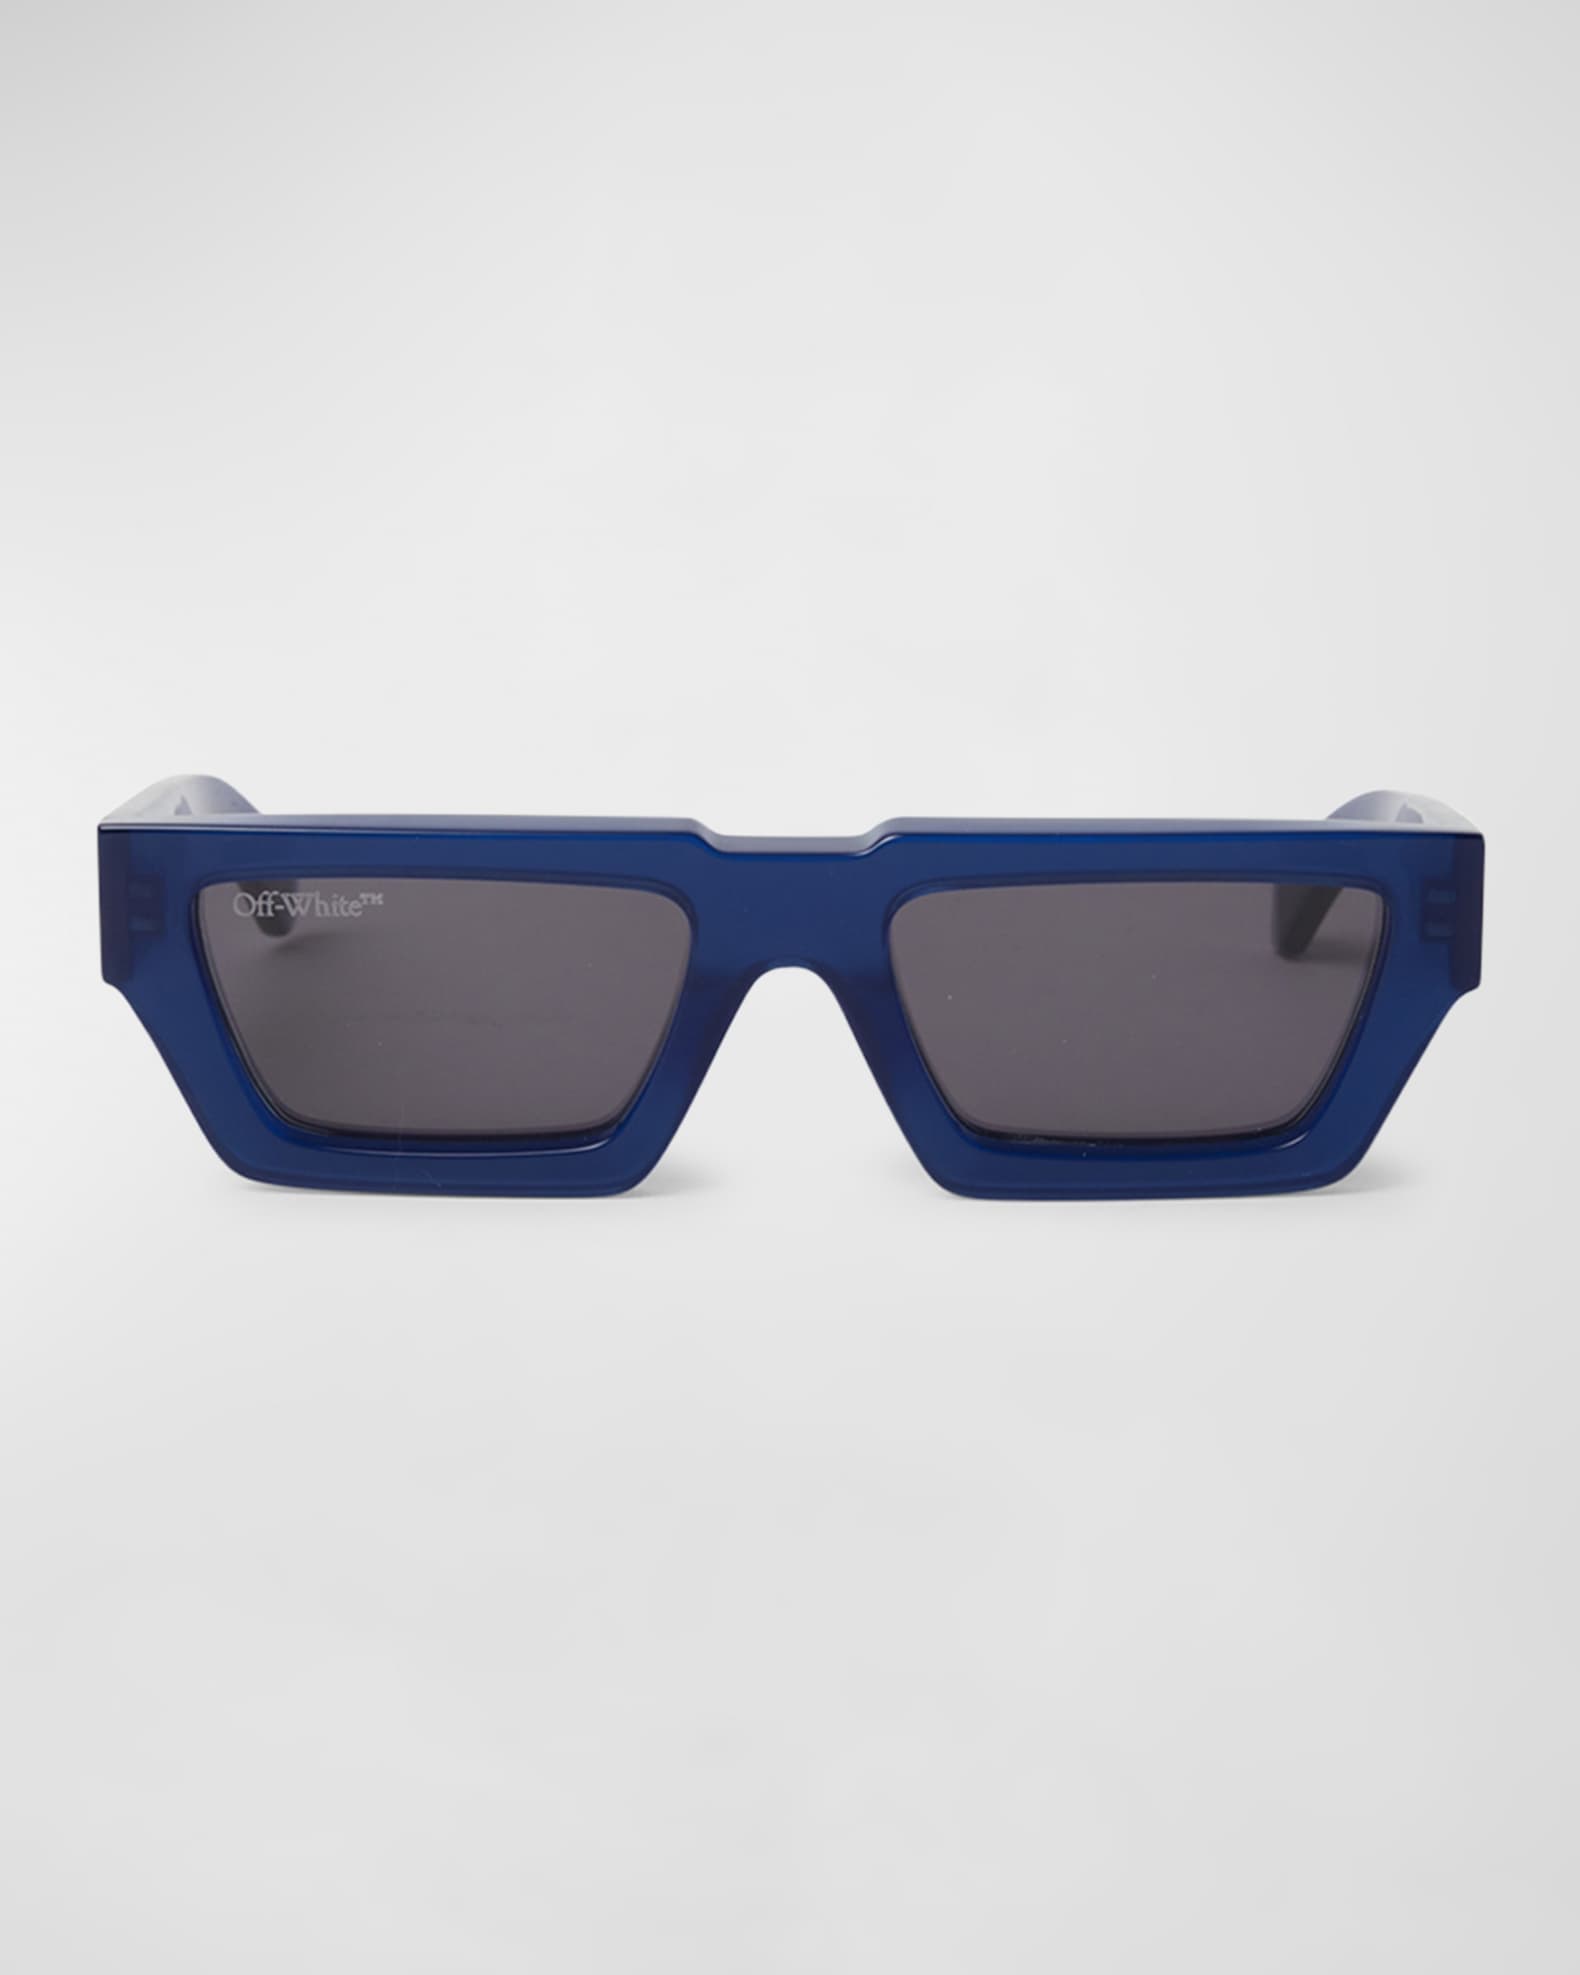 Louis Vuitton Men's Sunglasses for sale in Manchester, United